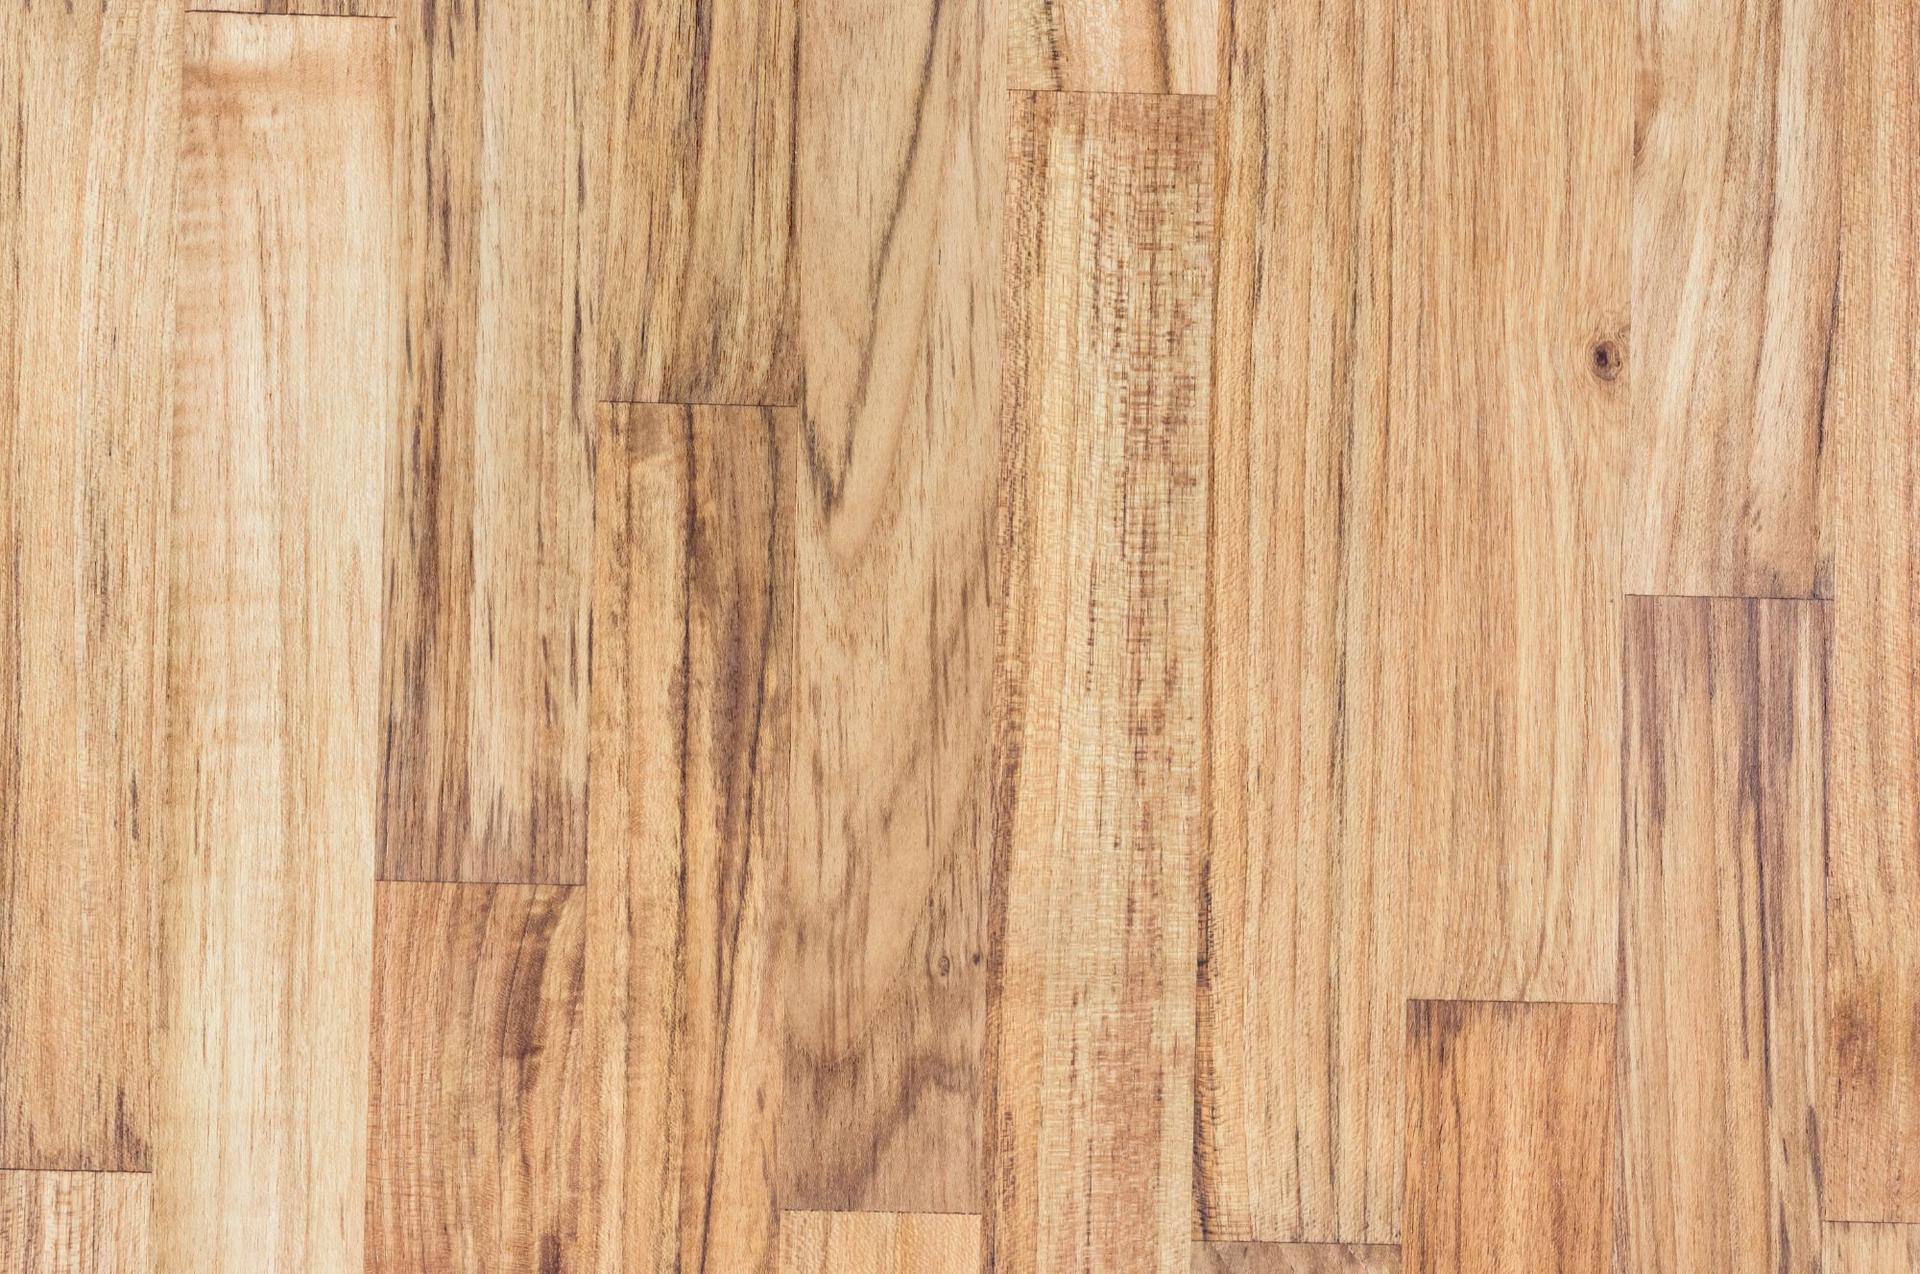 How to clean wood floors